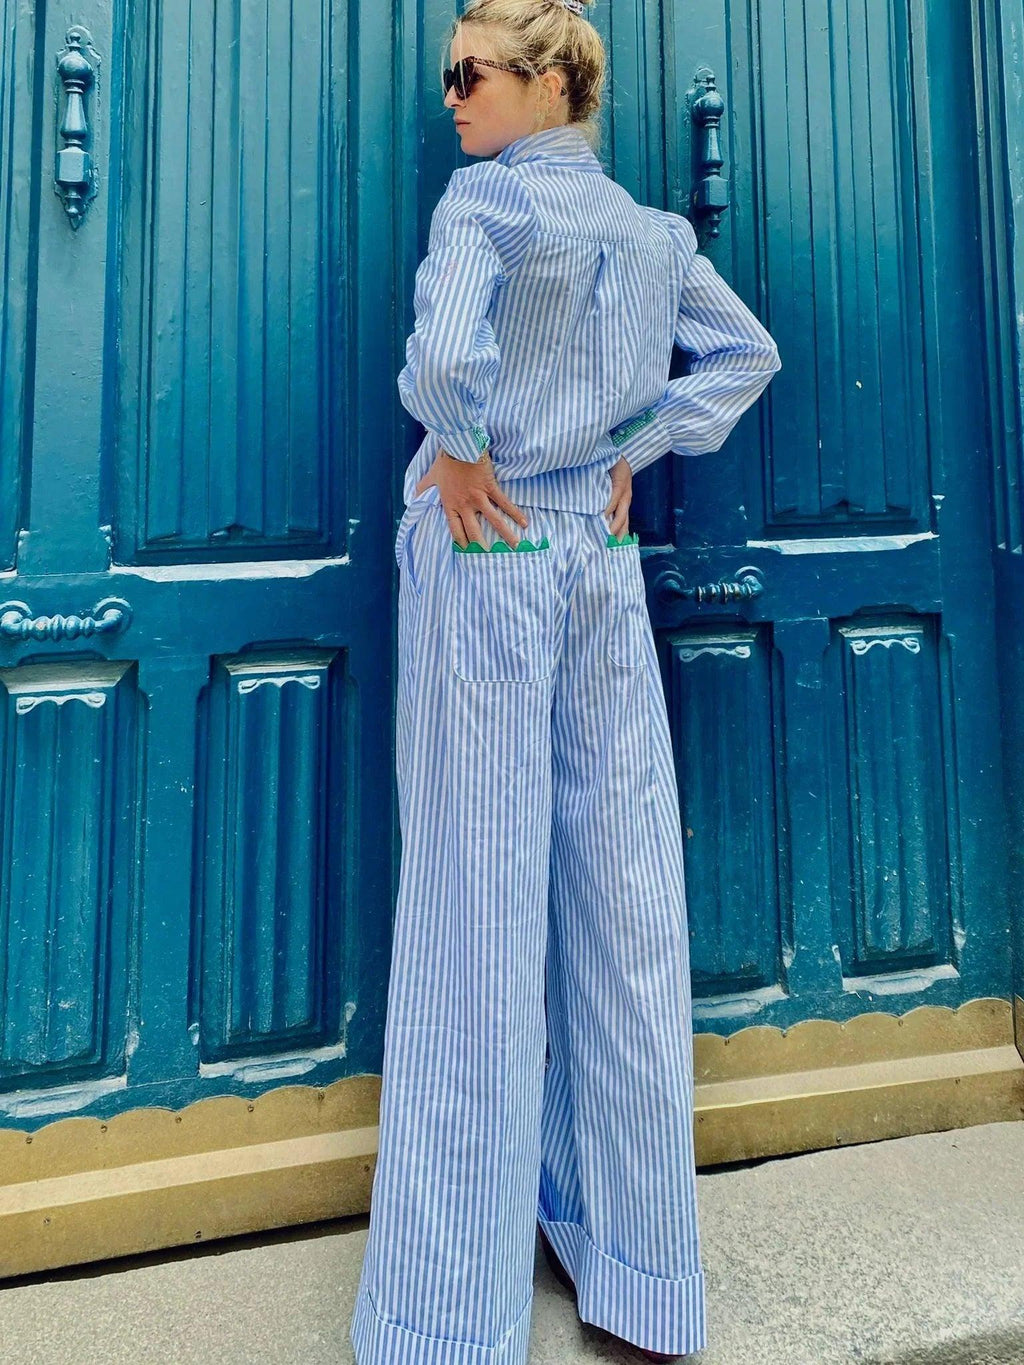 Soufflé turned up pants - blue stripes - Gingham Palace